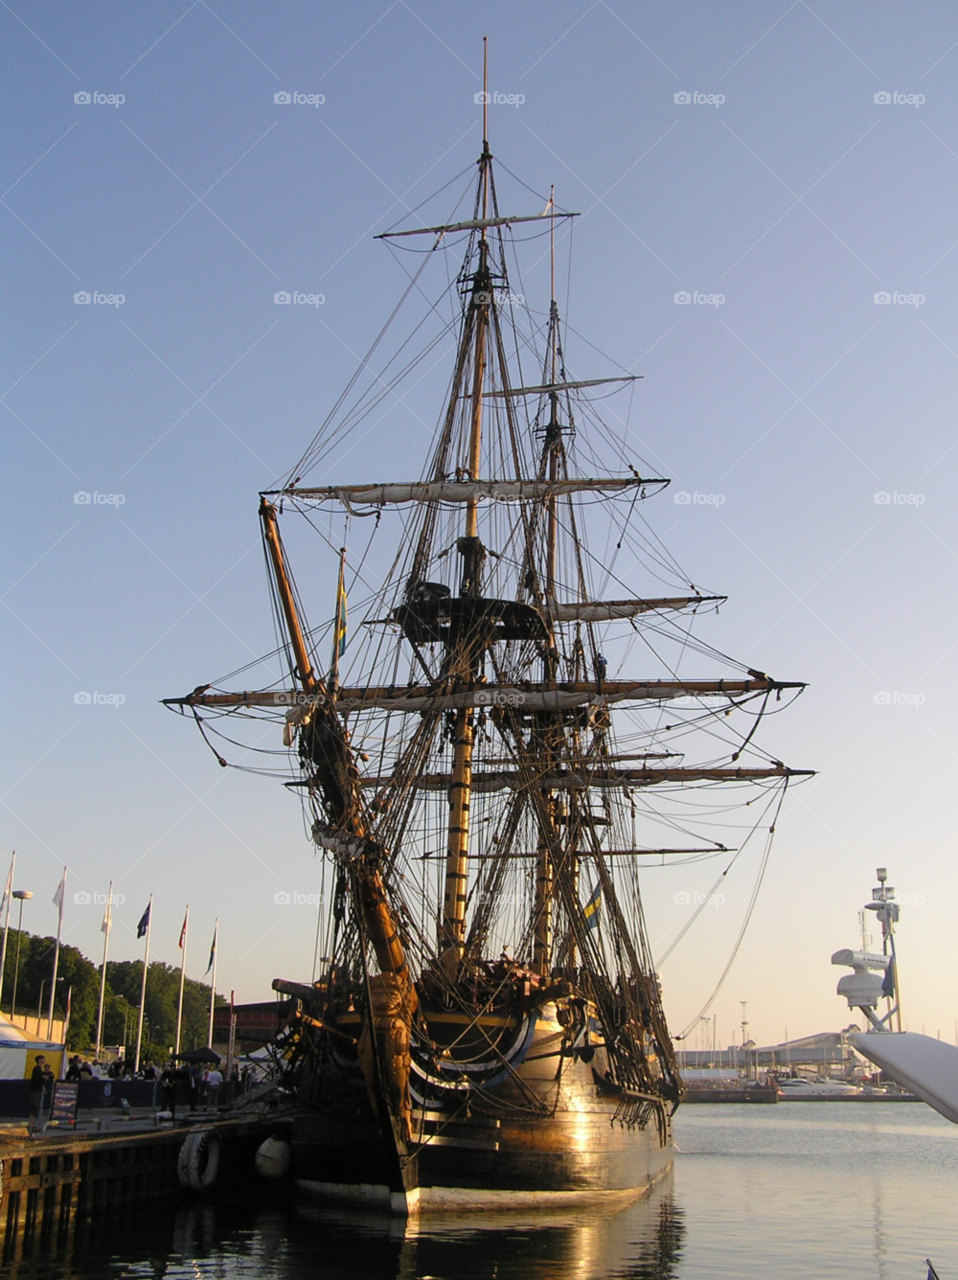 visby gothenburg fartyg old ship by MagnusPm